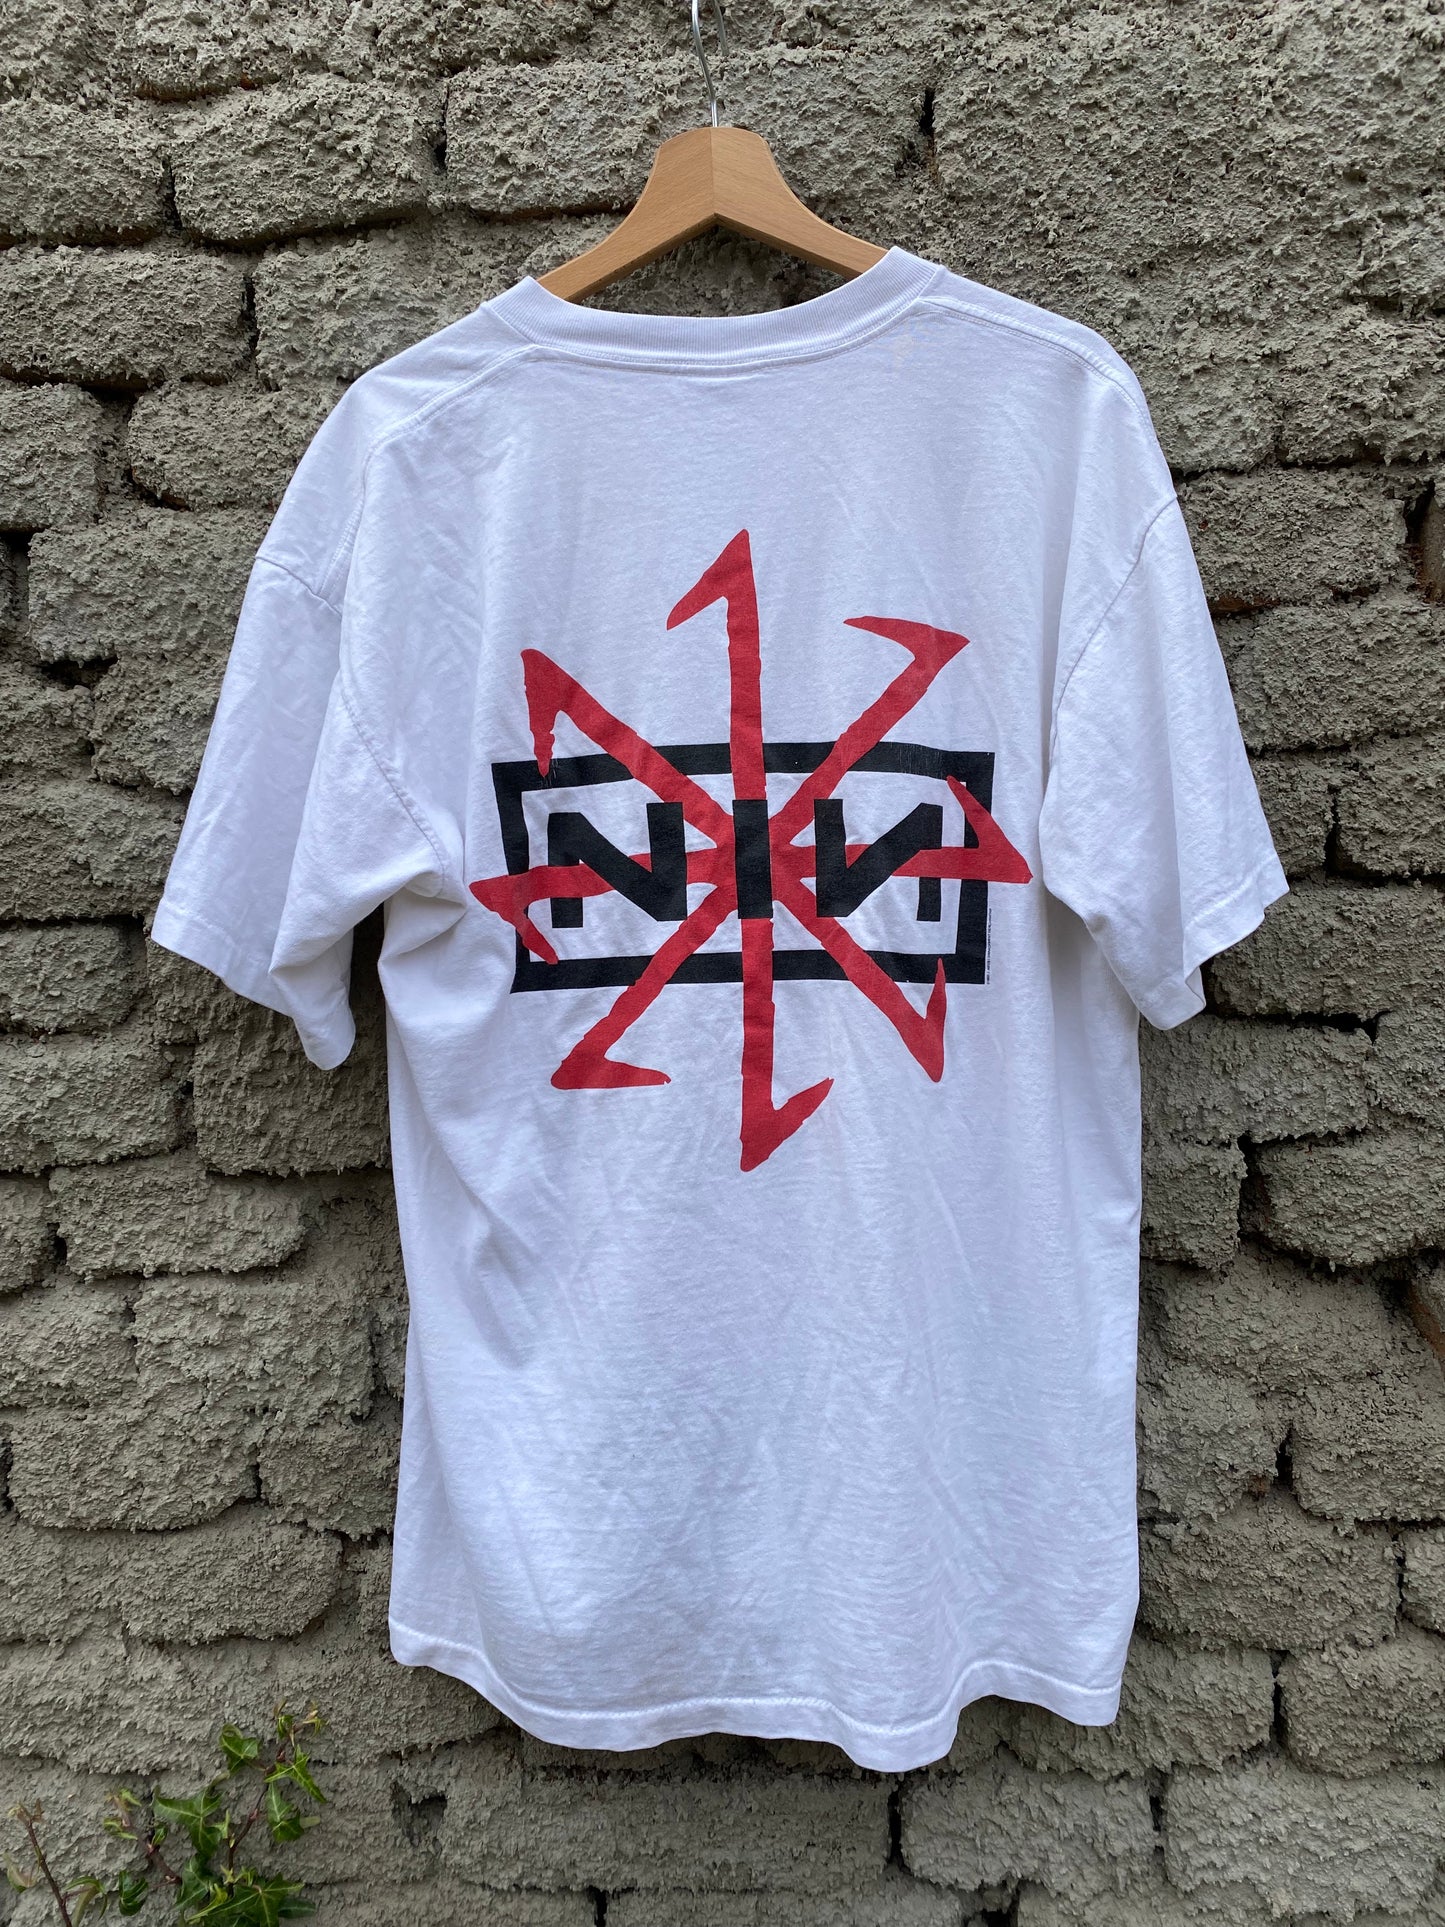 Vintage Nine Inch Nails "Devil" 1995 t-shirt - size XL